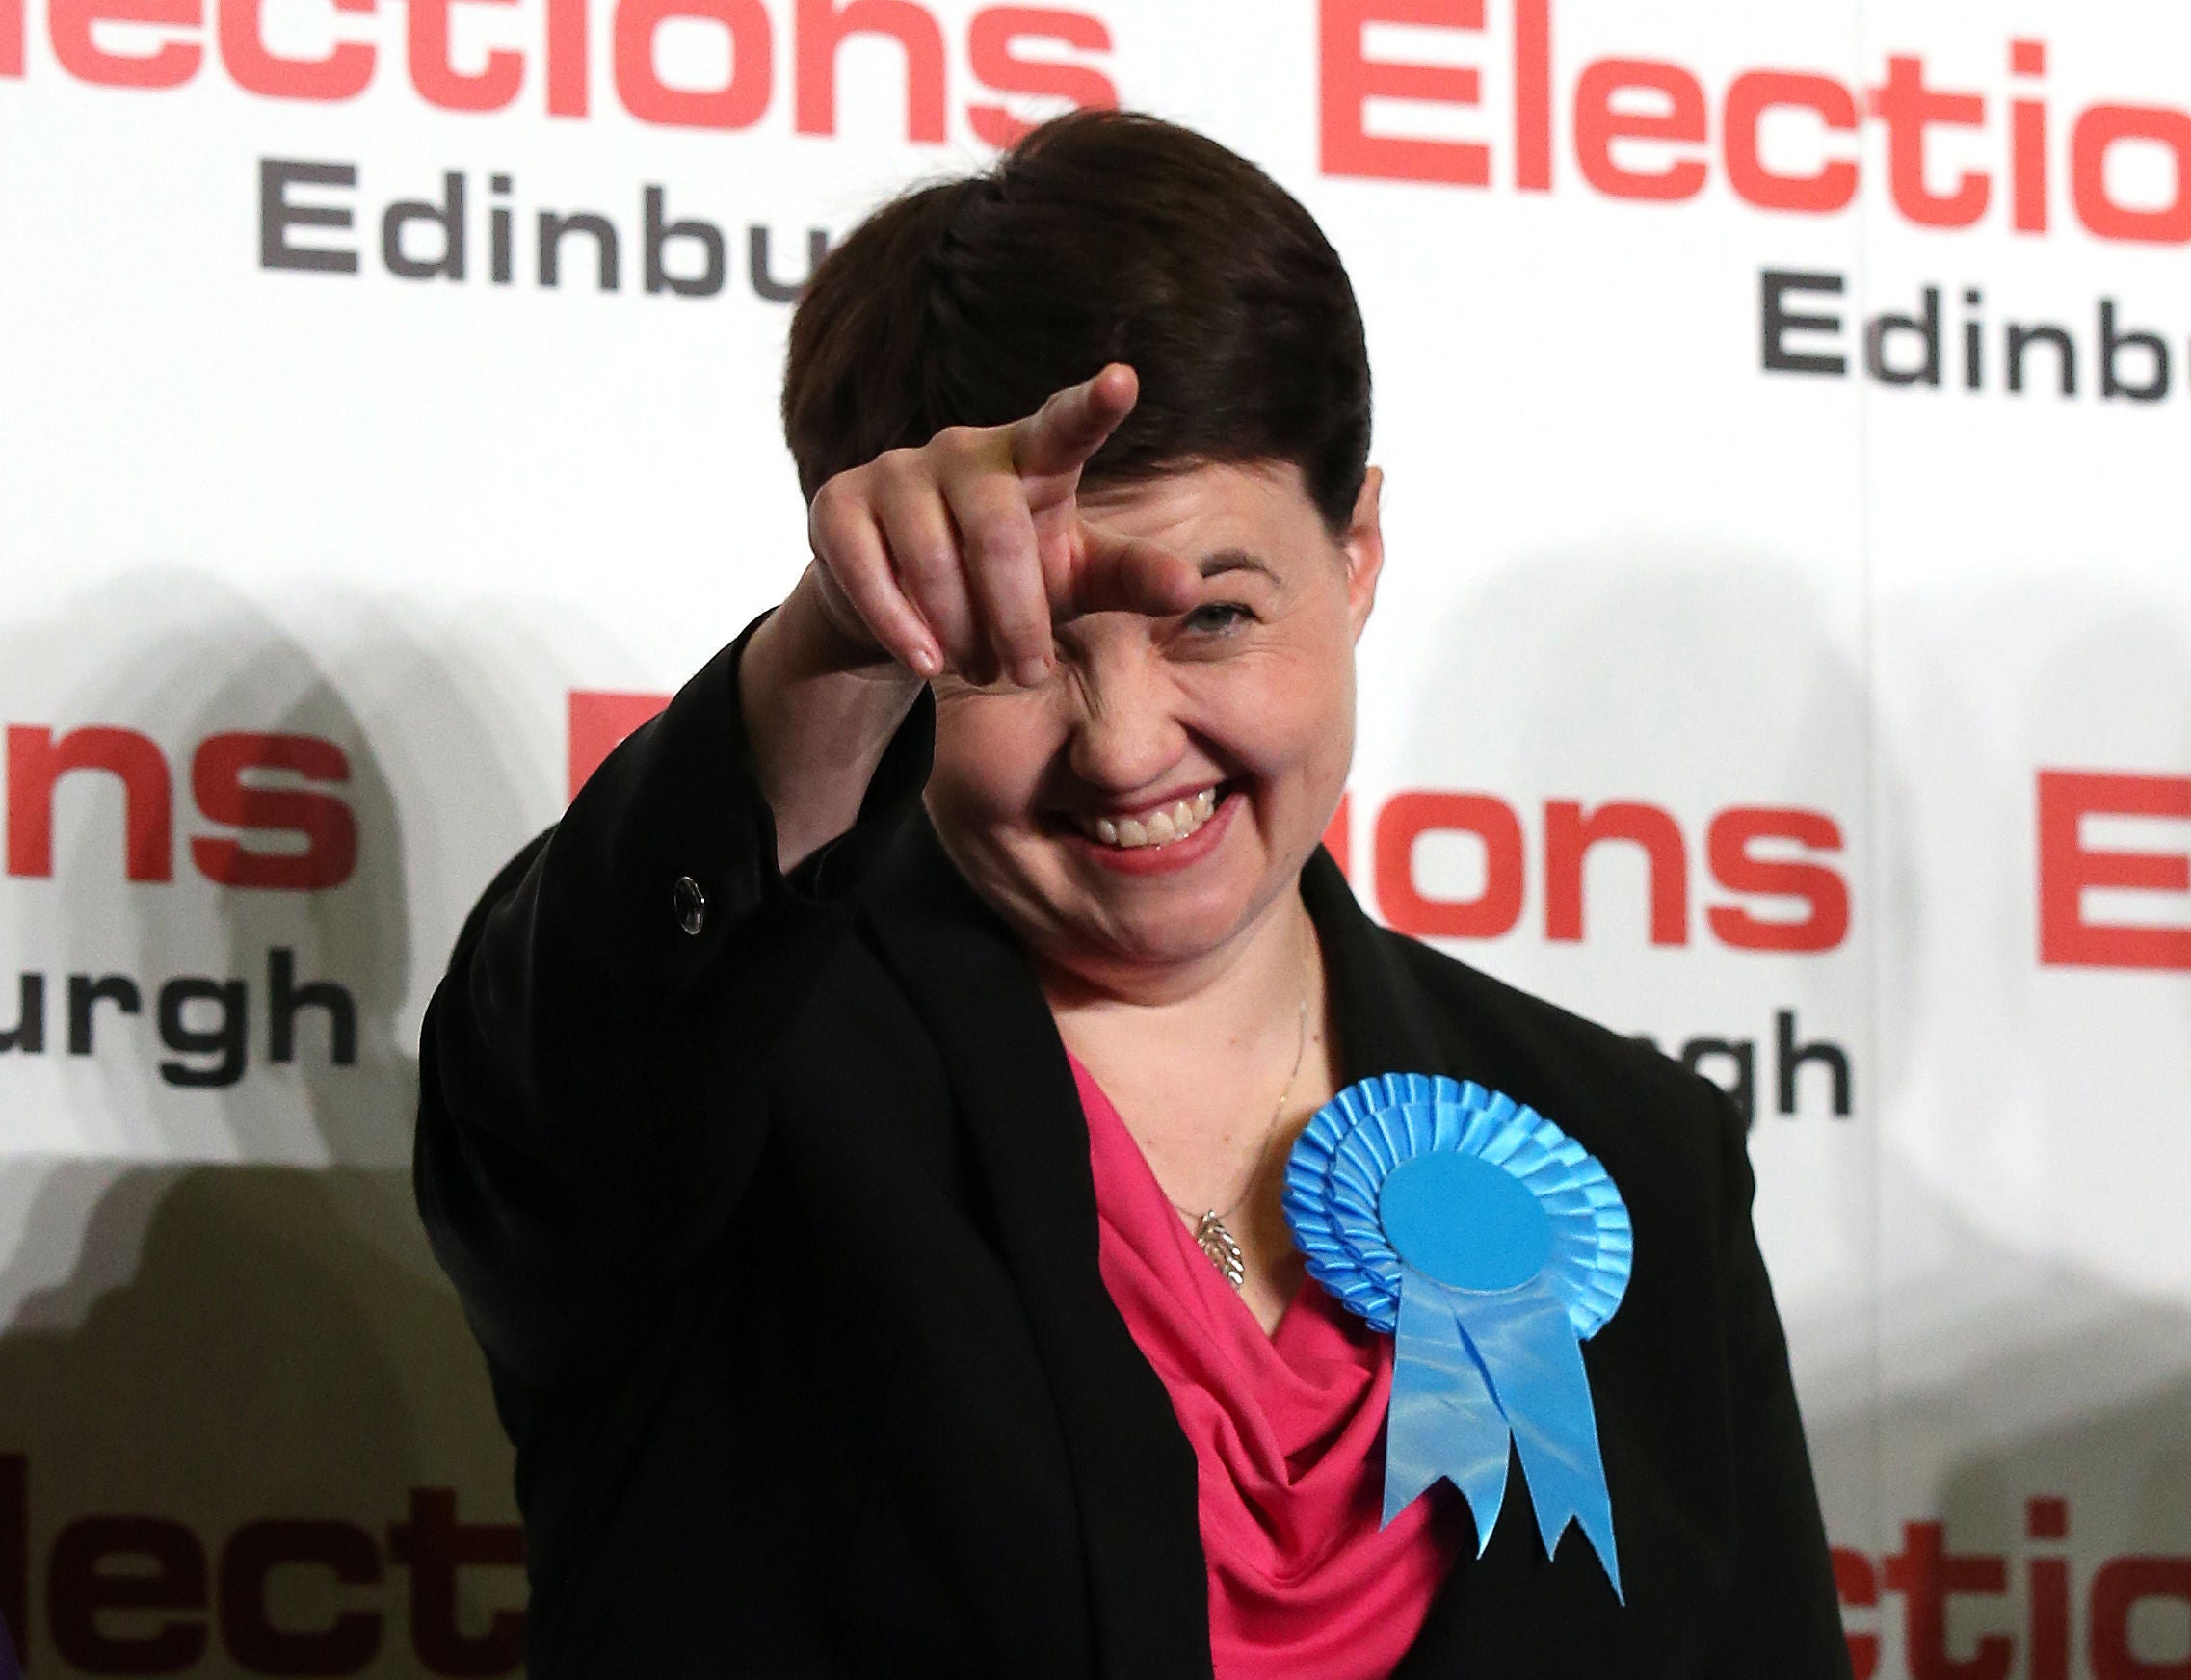 Scottish Conservative leader Ruth Davidson waves after winning the Edinburgh Central seat